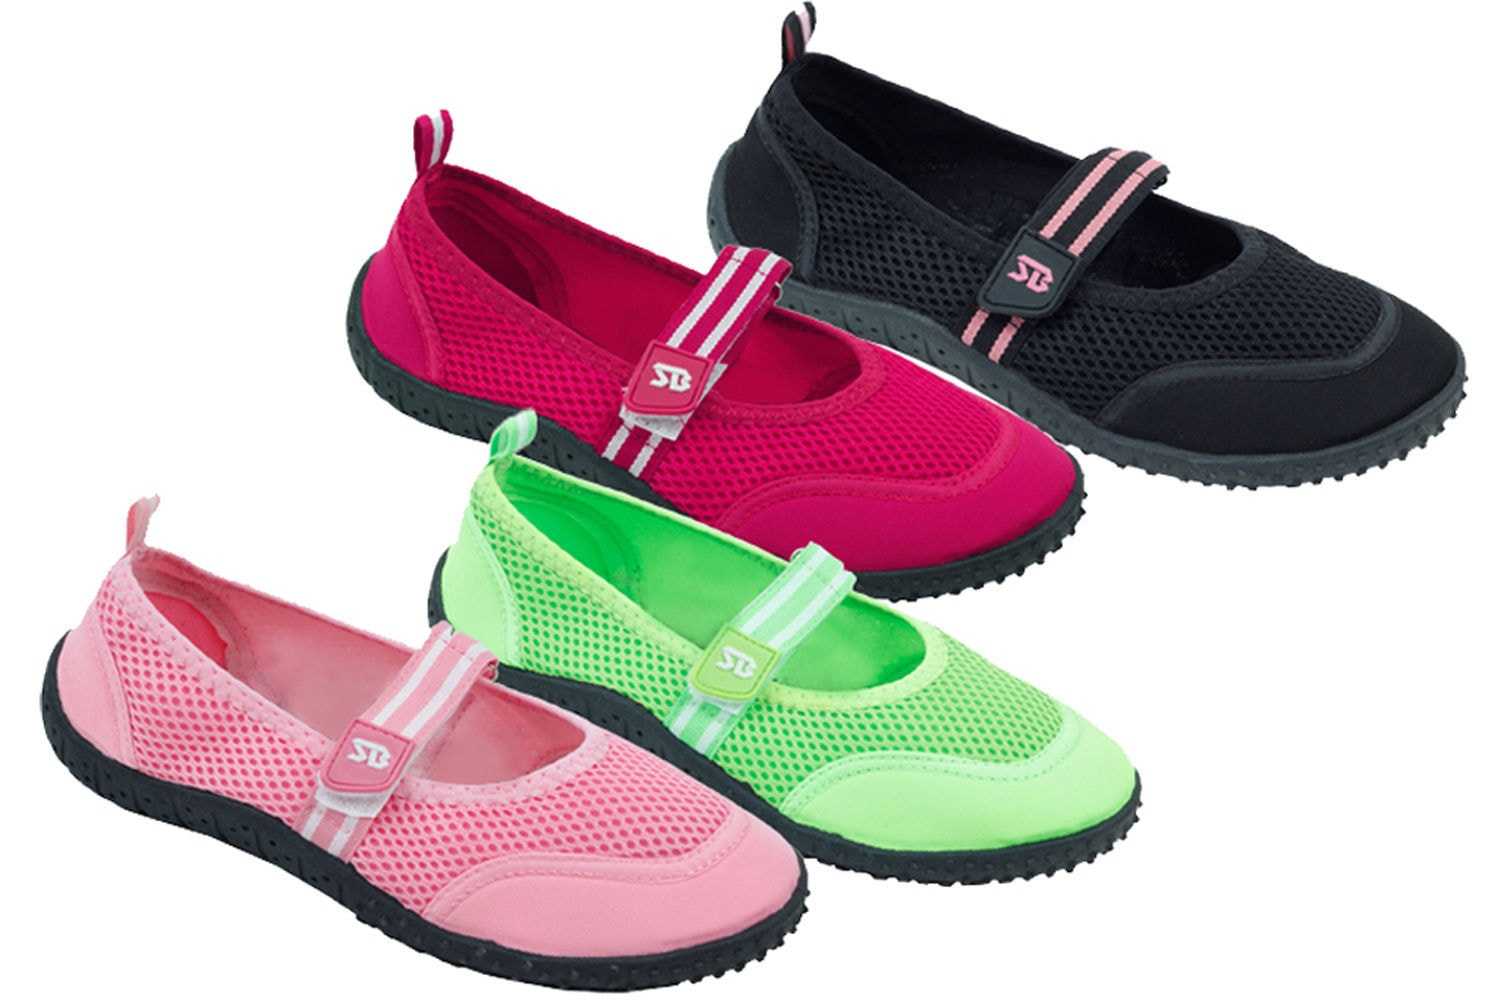 Starbay Women’s Slip-On Water Shoes